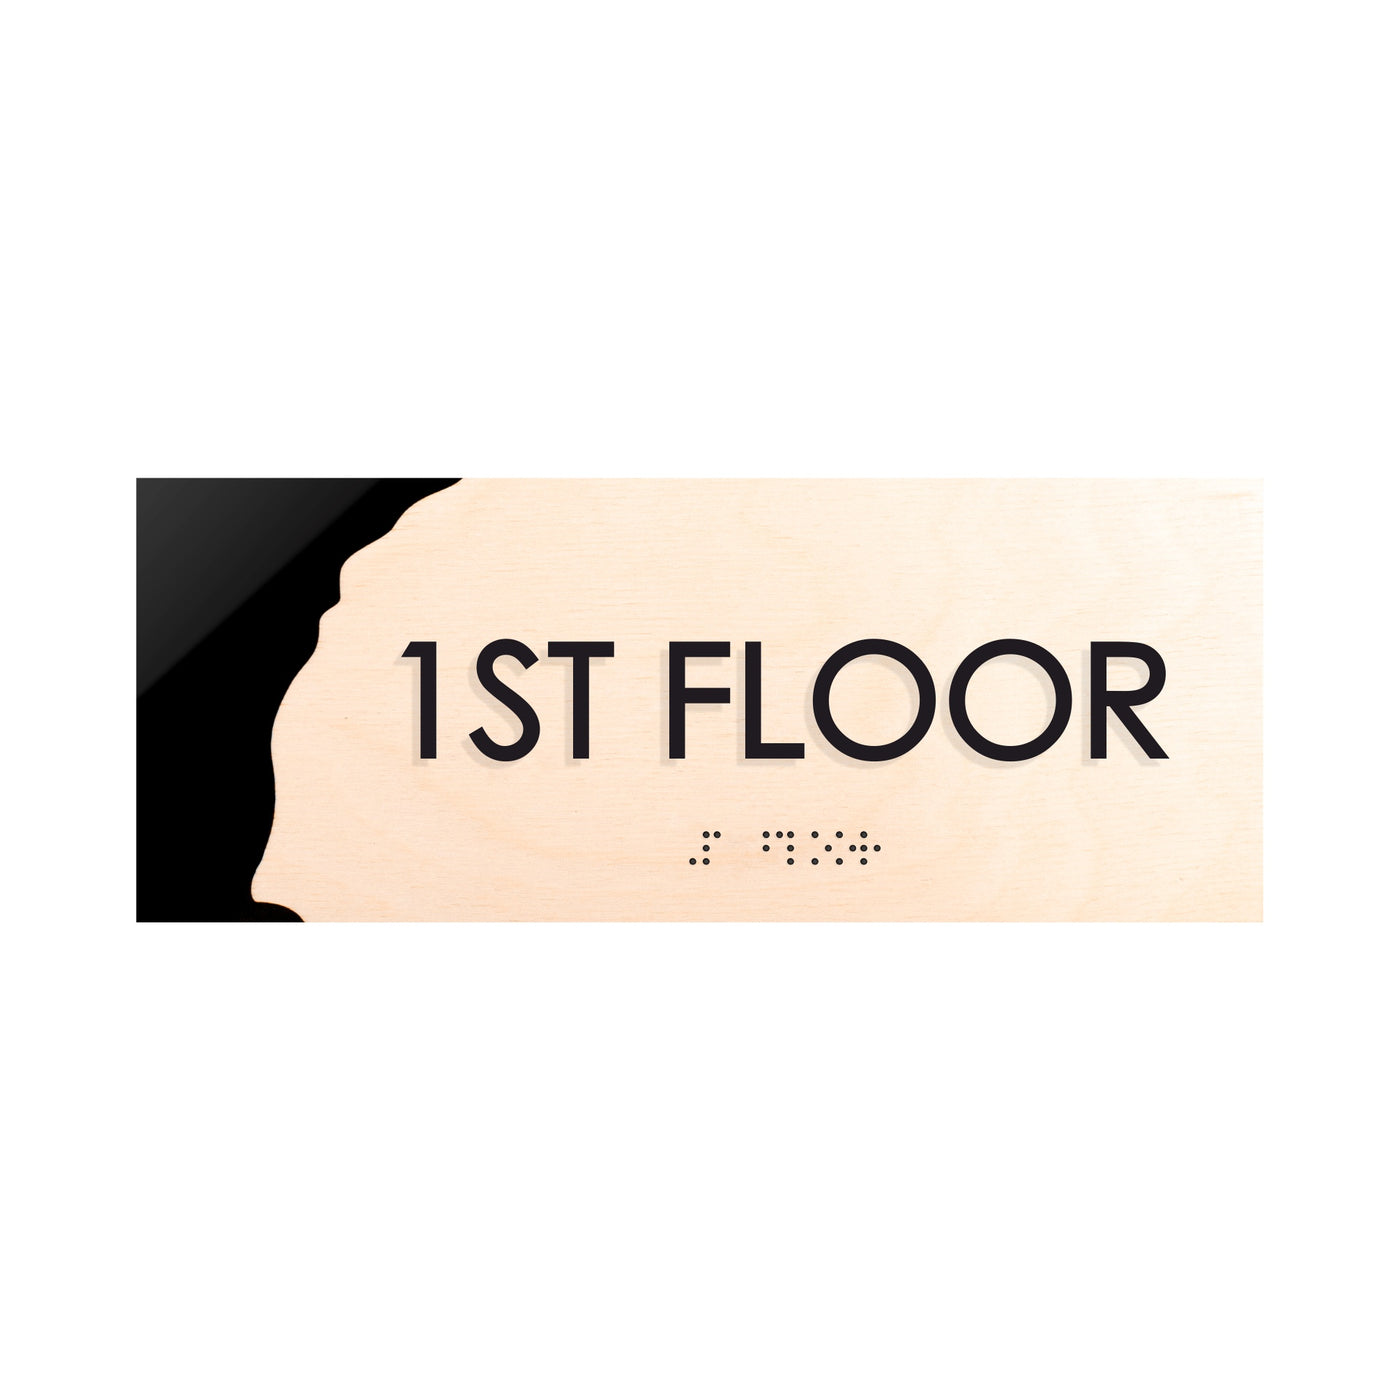 Floor Signs - Sign For 1st Floor "Sherwood" Design